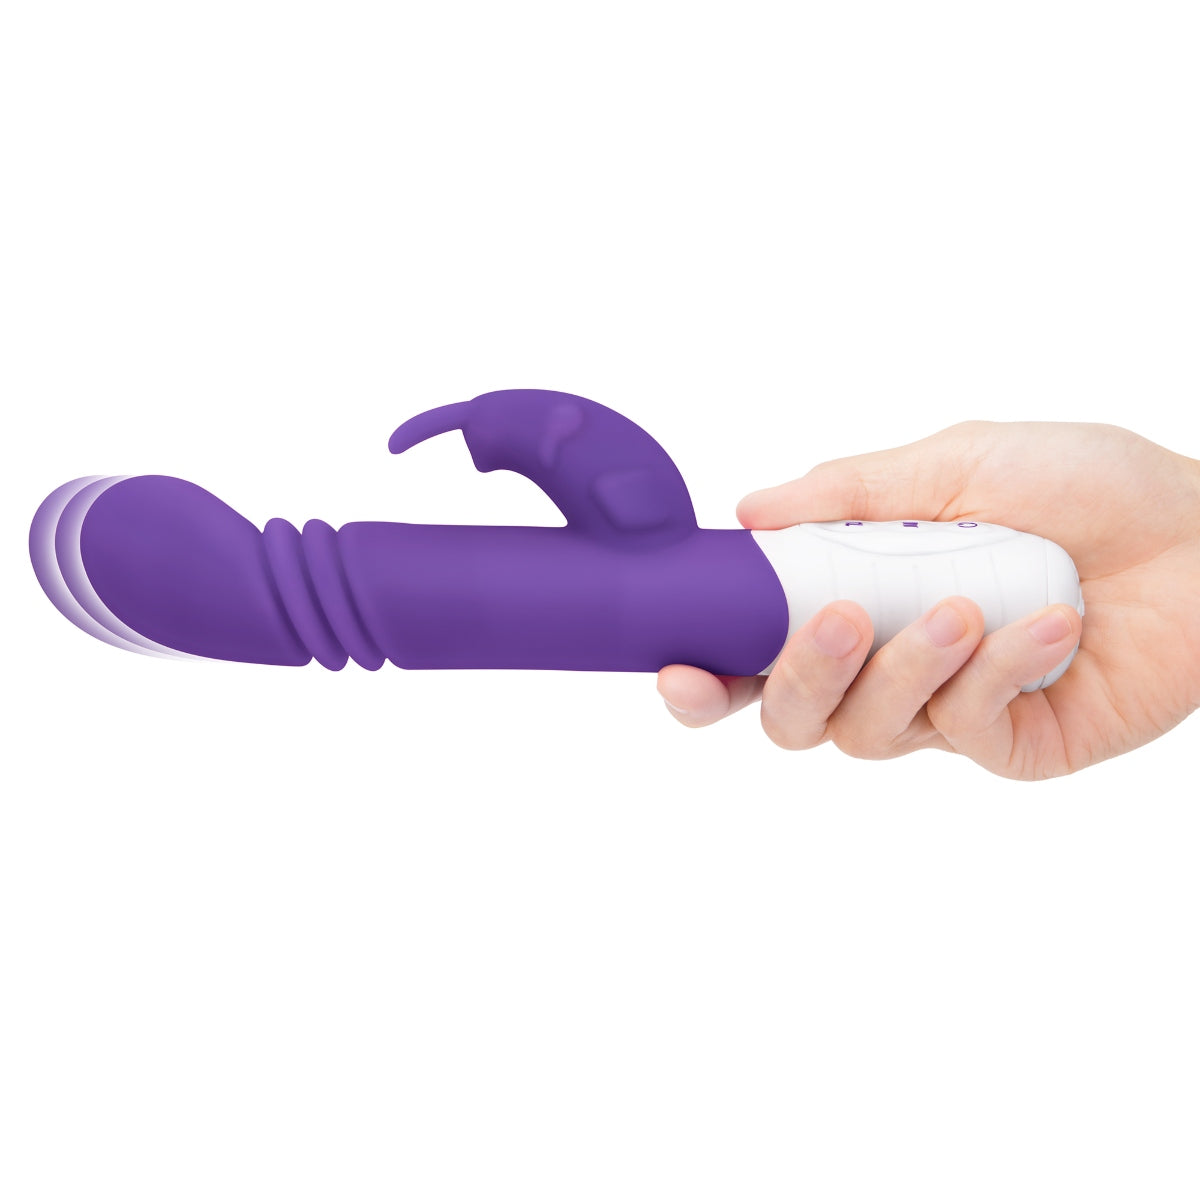 Rabbit Essentials | Rechargeable Slim Shaft thrusting G Spot Rabbit Vibrator - Purple